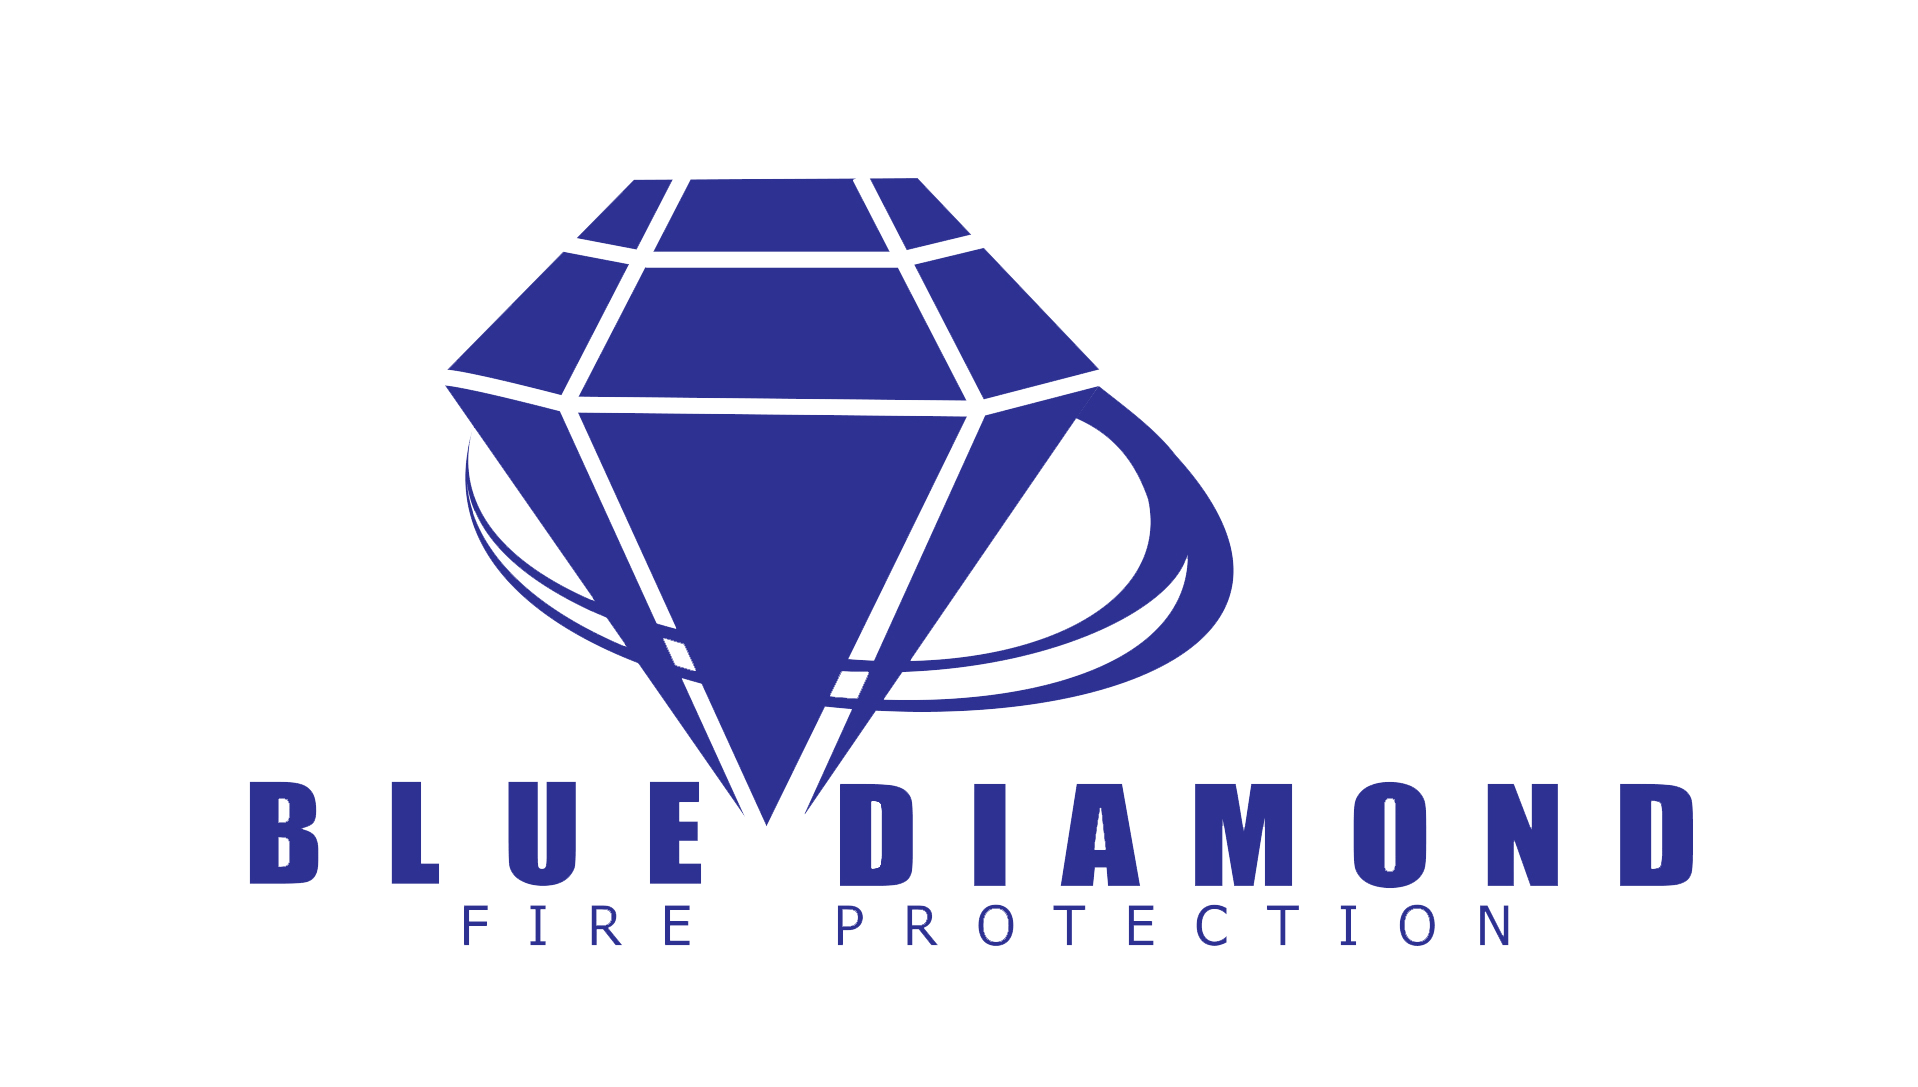 Blue Diamond Company Logo - Company Profile. Blue Diamond Fire Protection